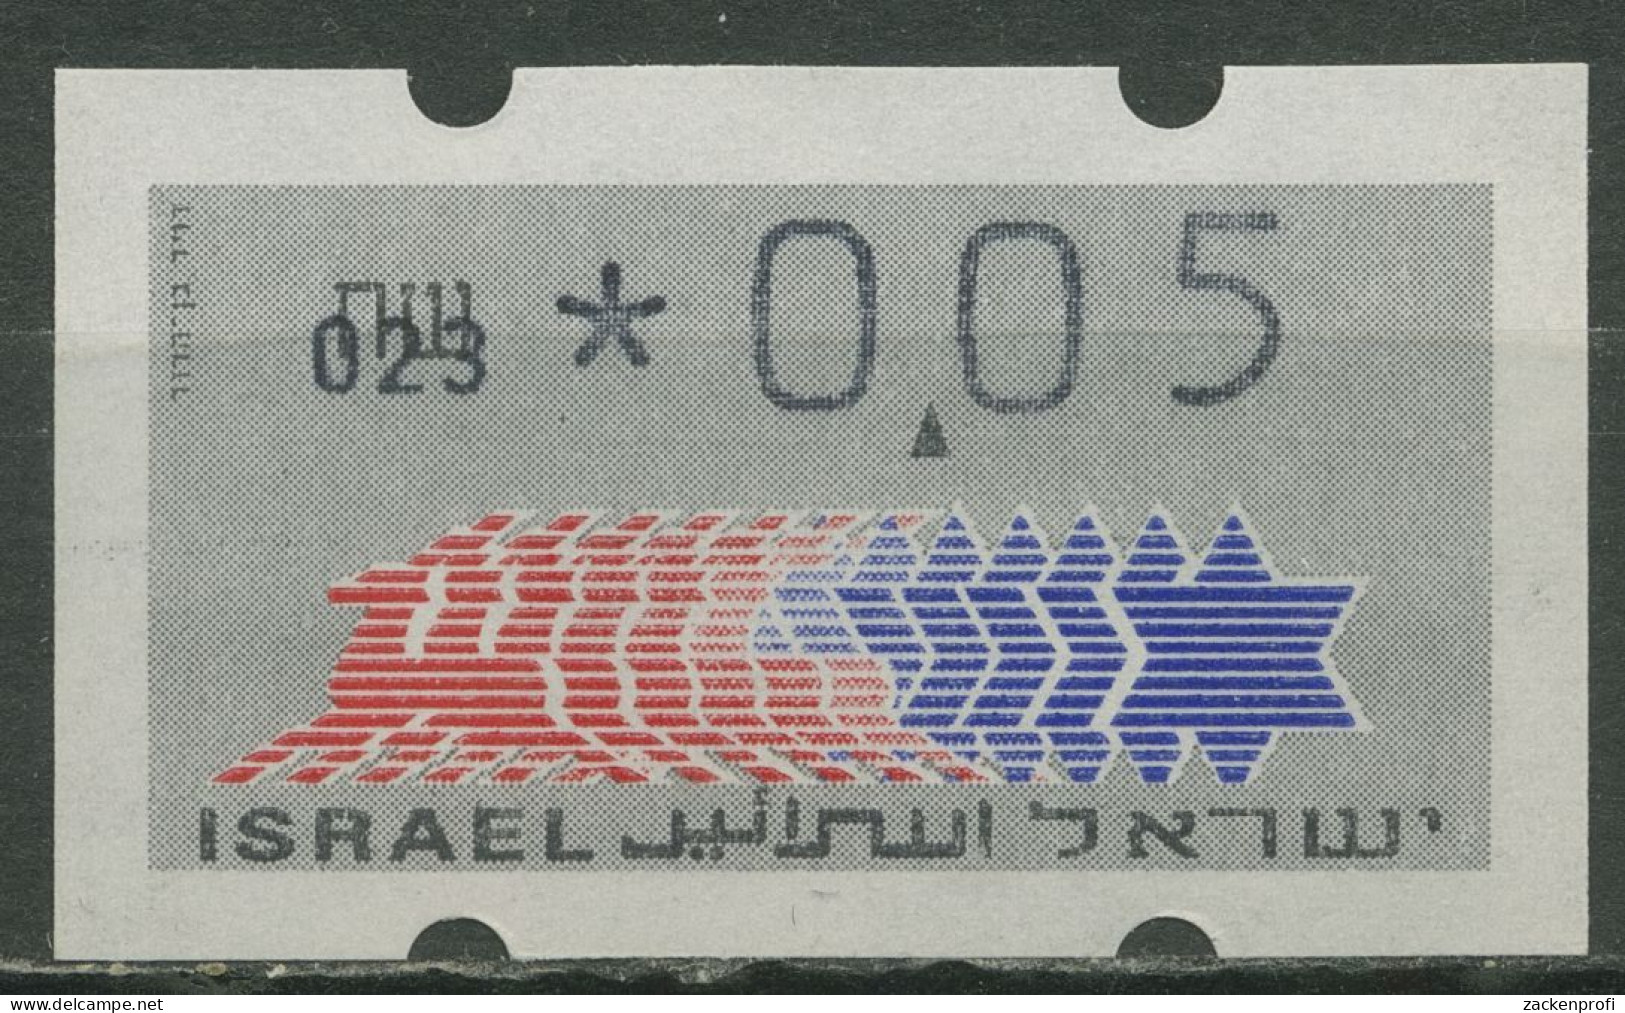 Israel ATM 1990 Hirsch Automat 023 Einzelwert ATM 3.1.23 Postfrisch - Franking Labels